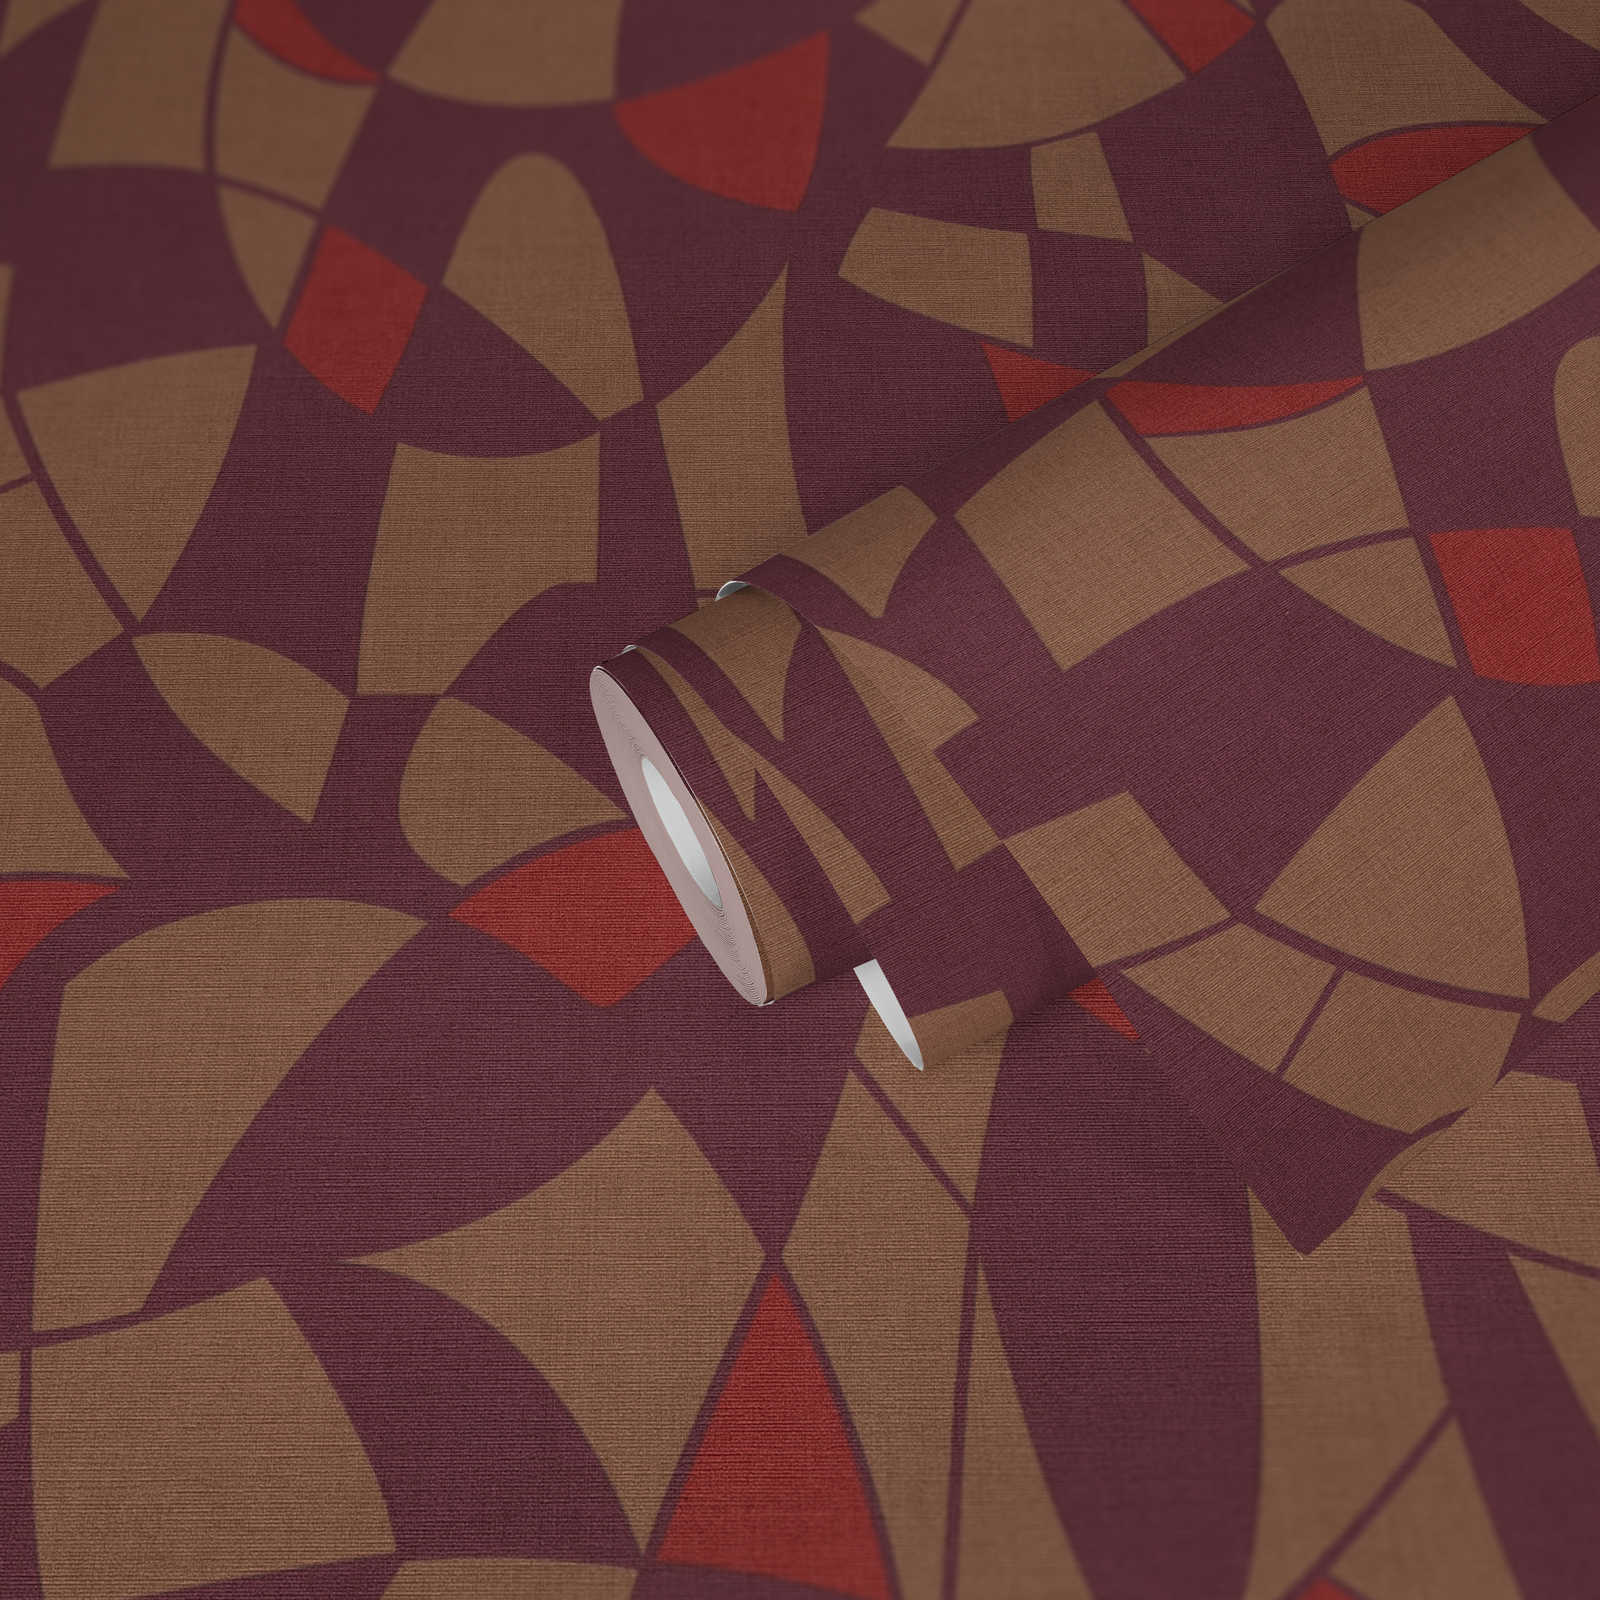             Vliestapete in dunklen Farben im abstrakten Muster – Lila, Braun, Rot
        